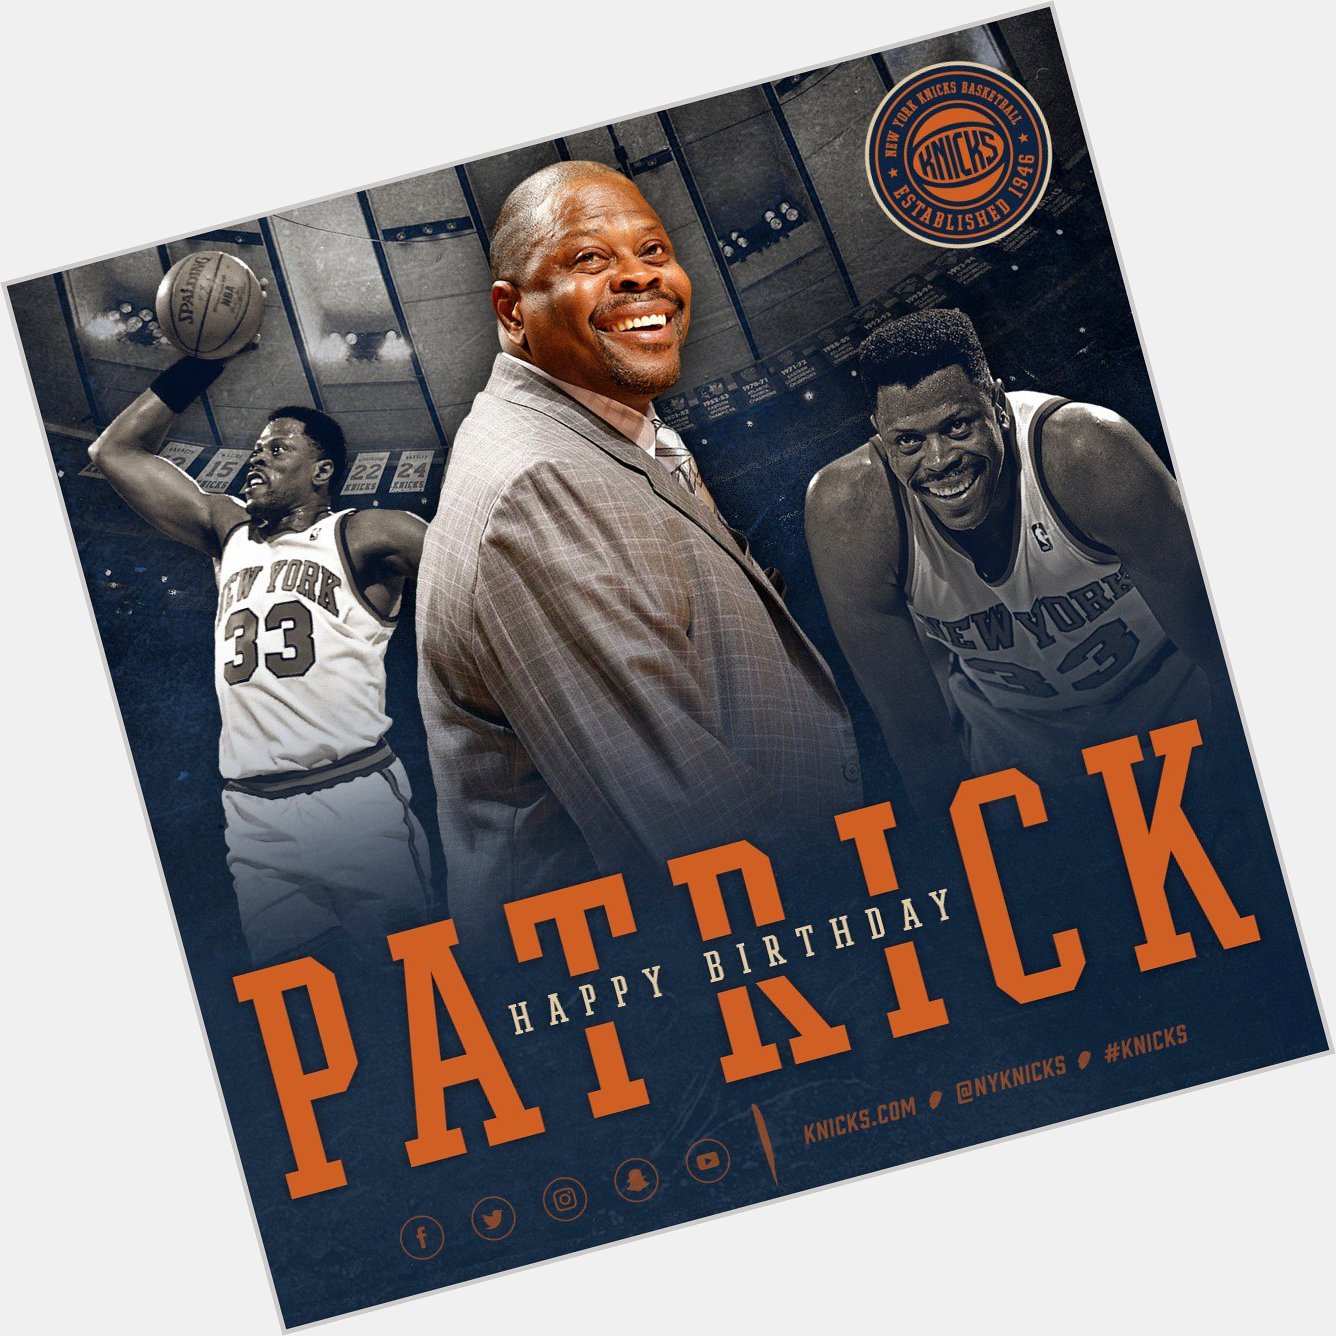 To wish legend Patrick Ewing a happy birthday! 